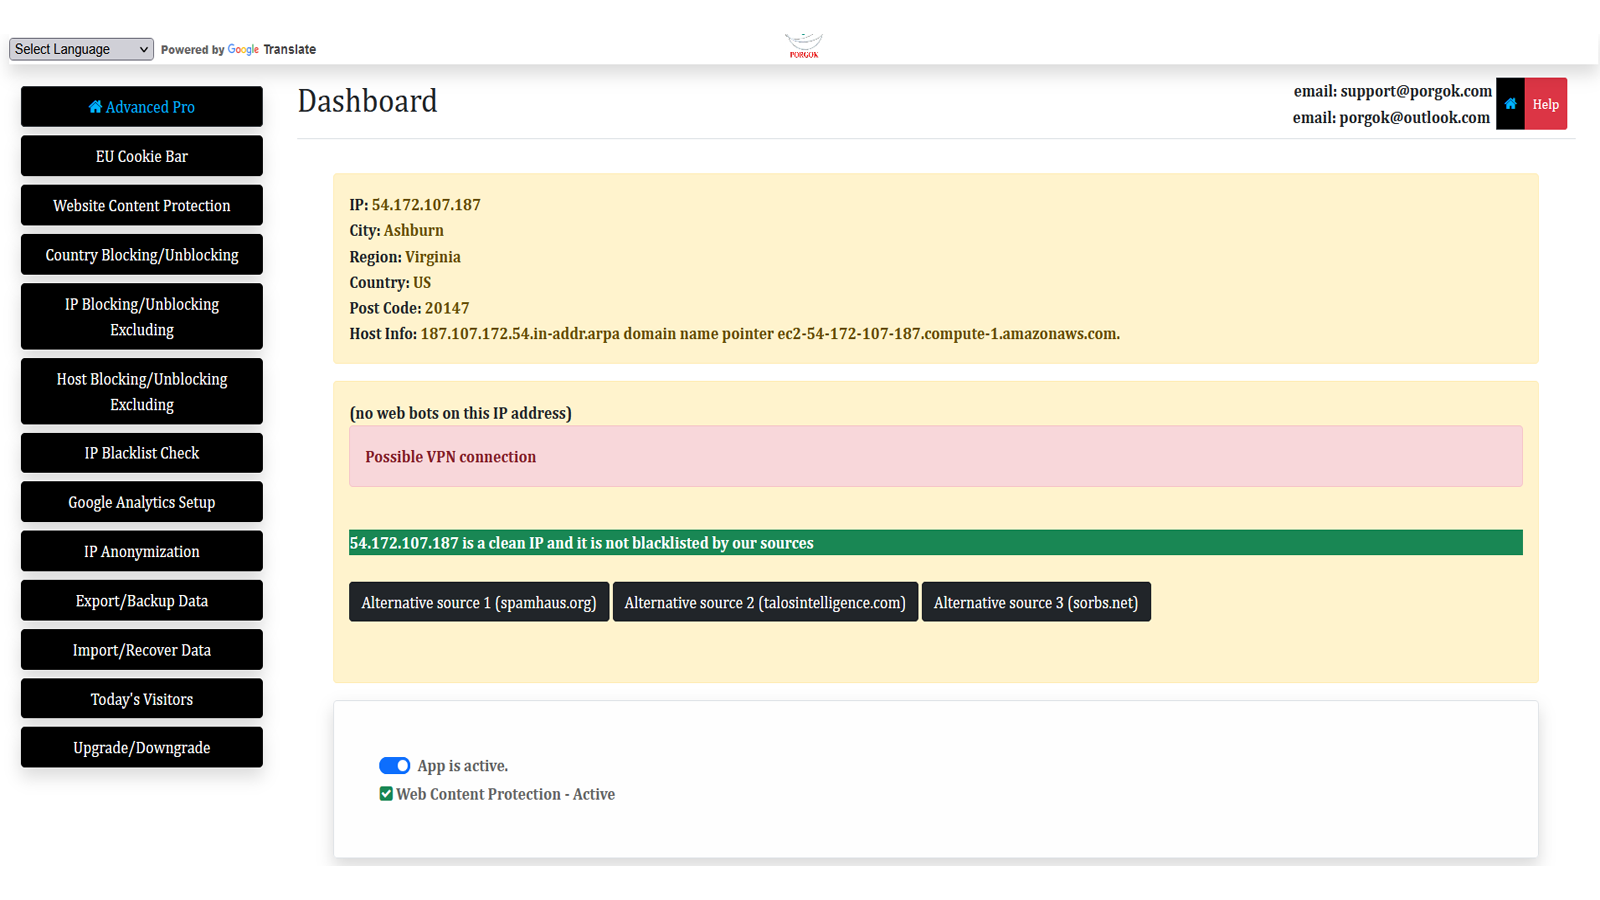 IP blacklist check. Fraud filter - Threat Score | Shopify